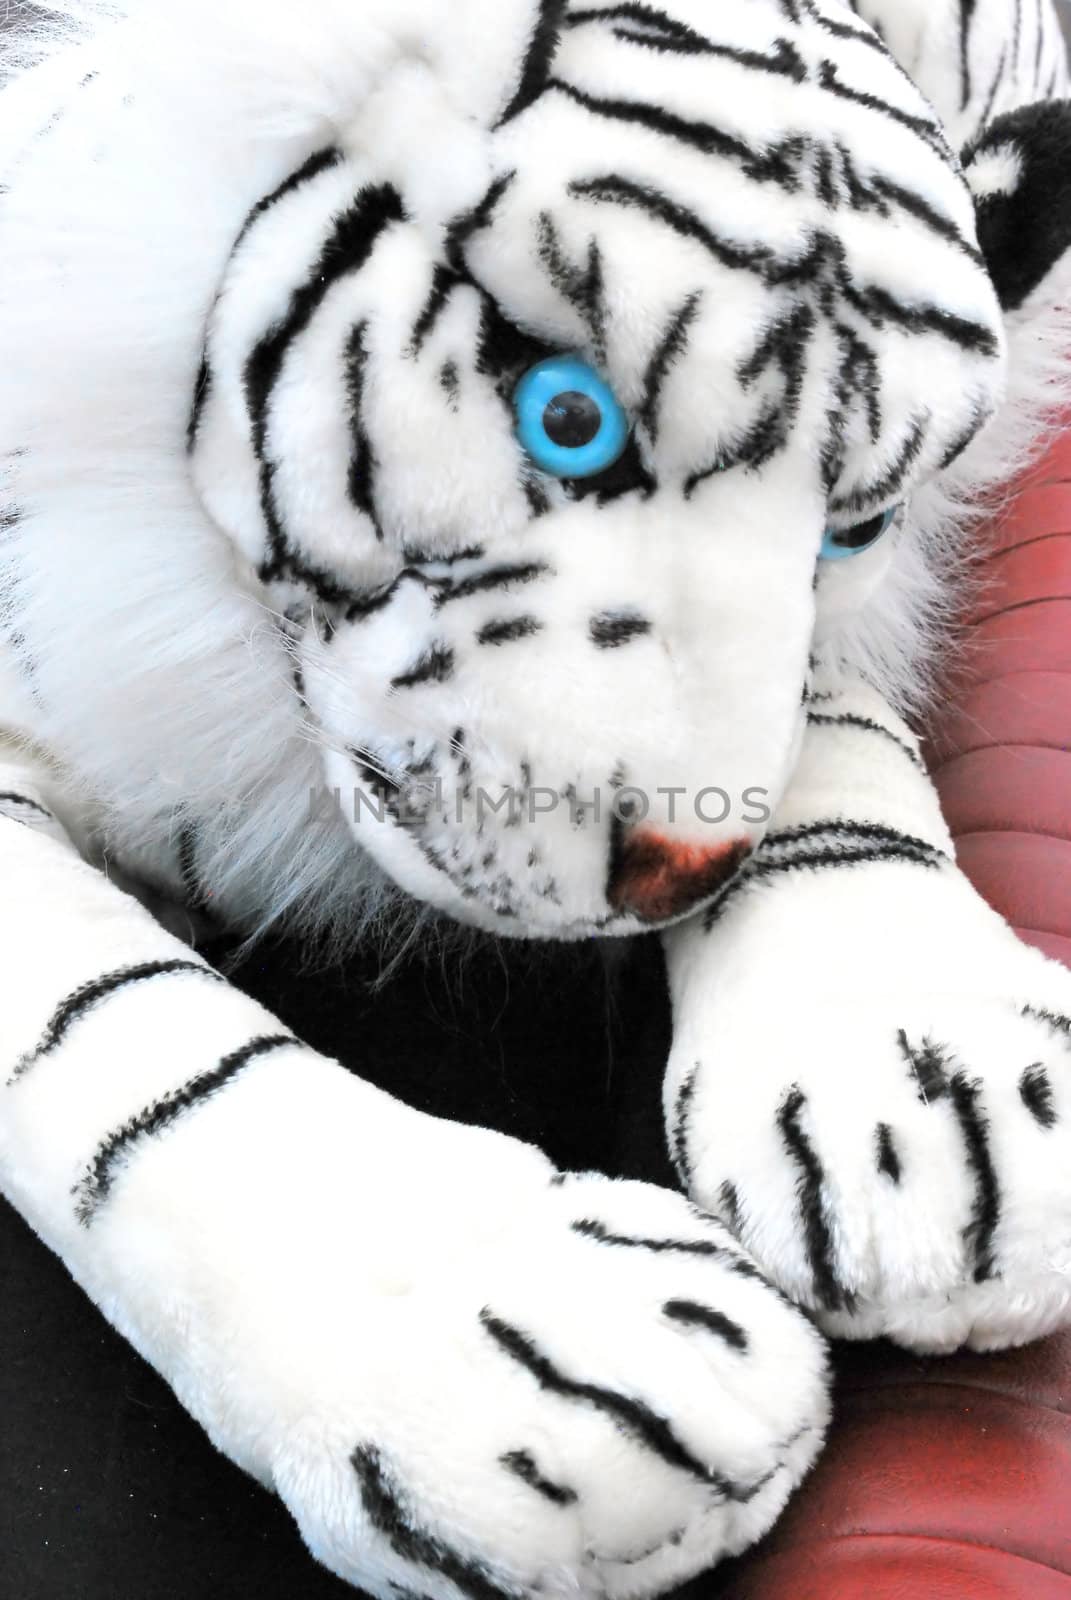 Stuffed Bengal tiger displayed indoors.